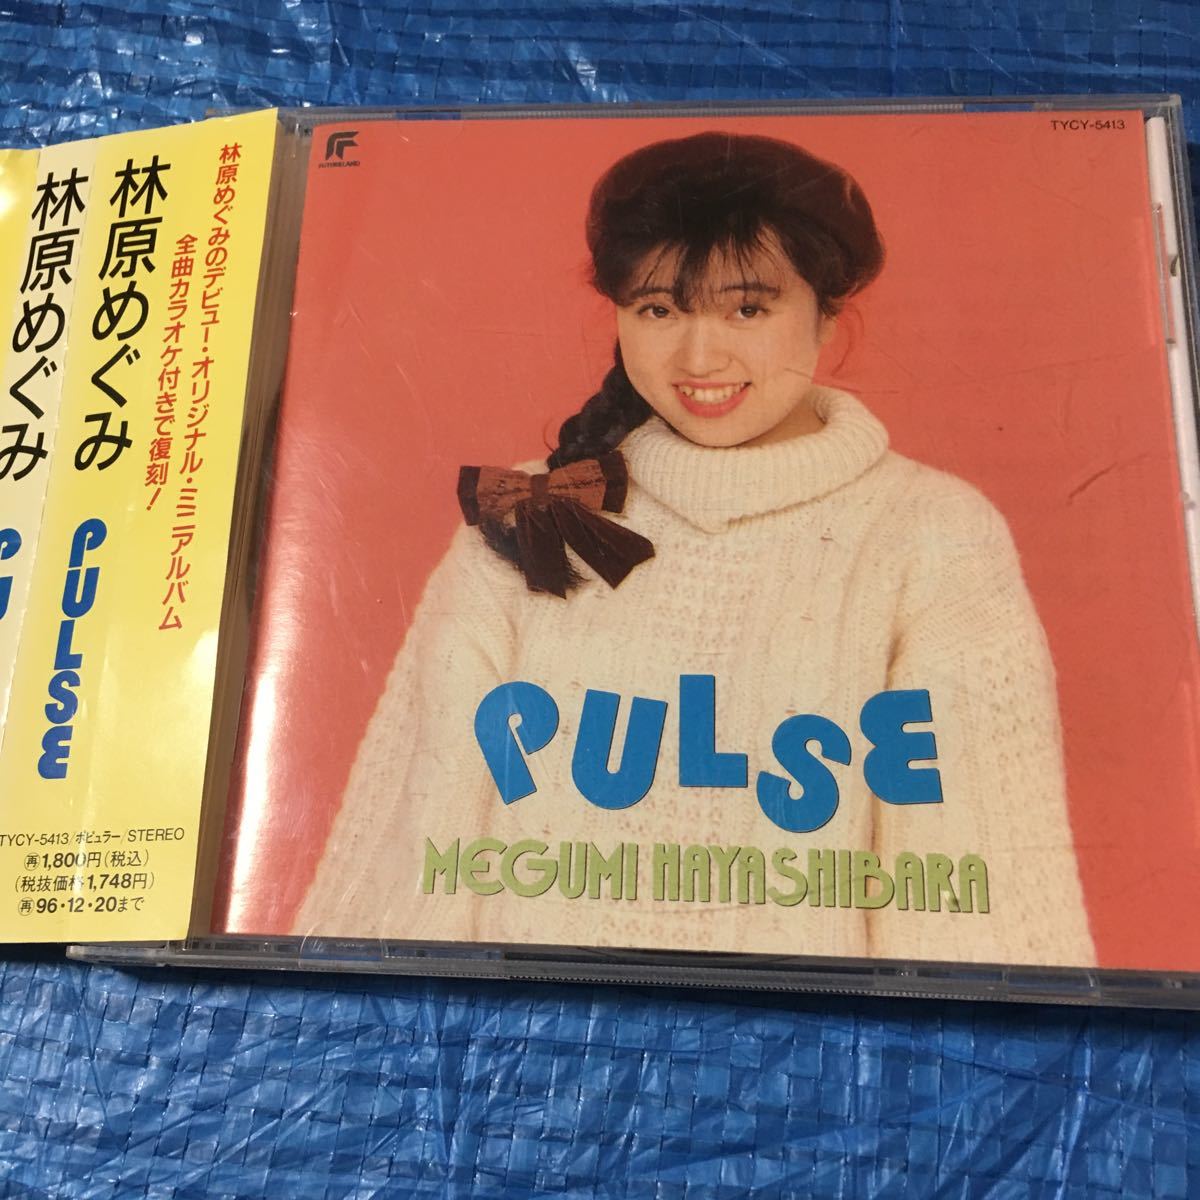 CD Hayashibara Megumi pulse